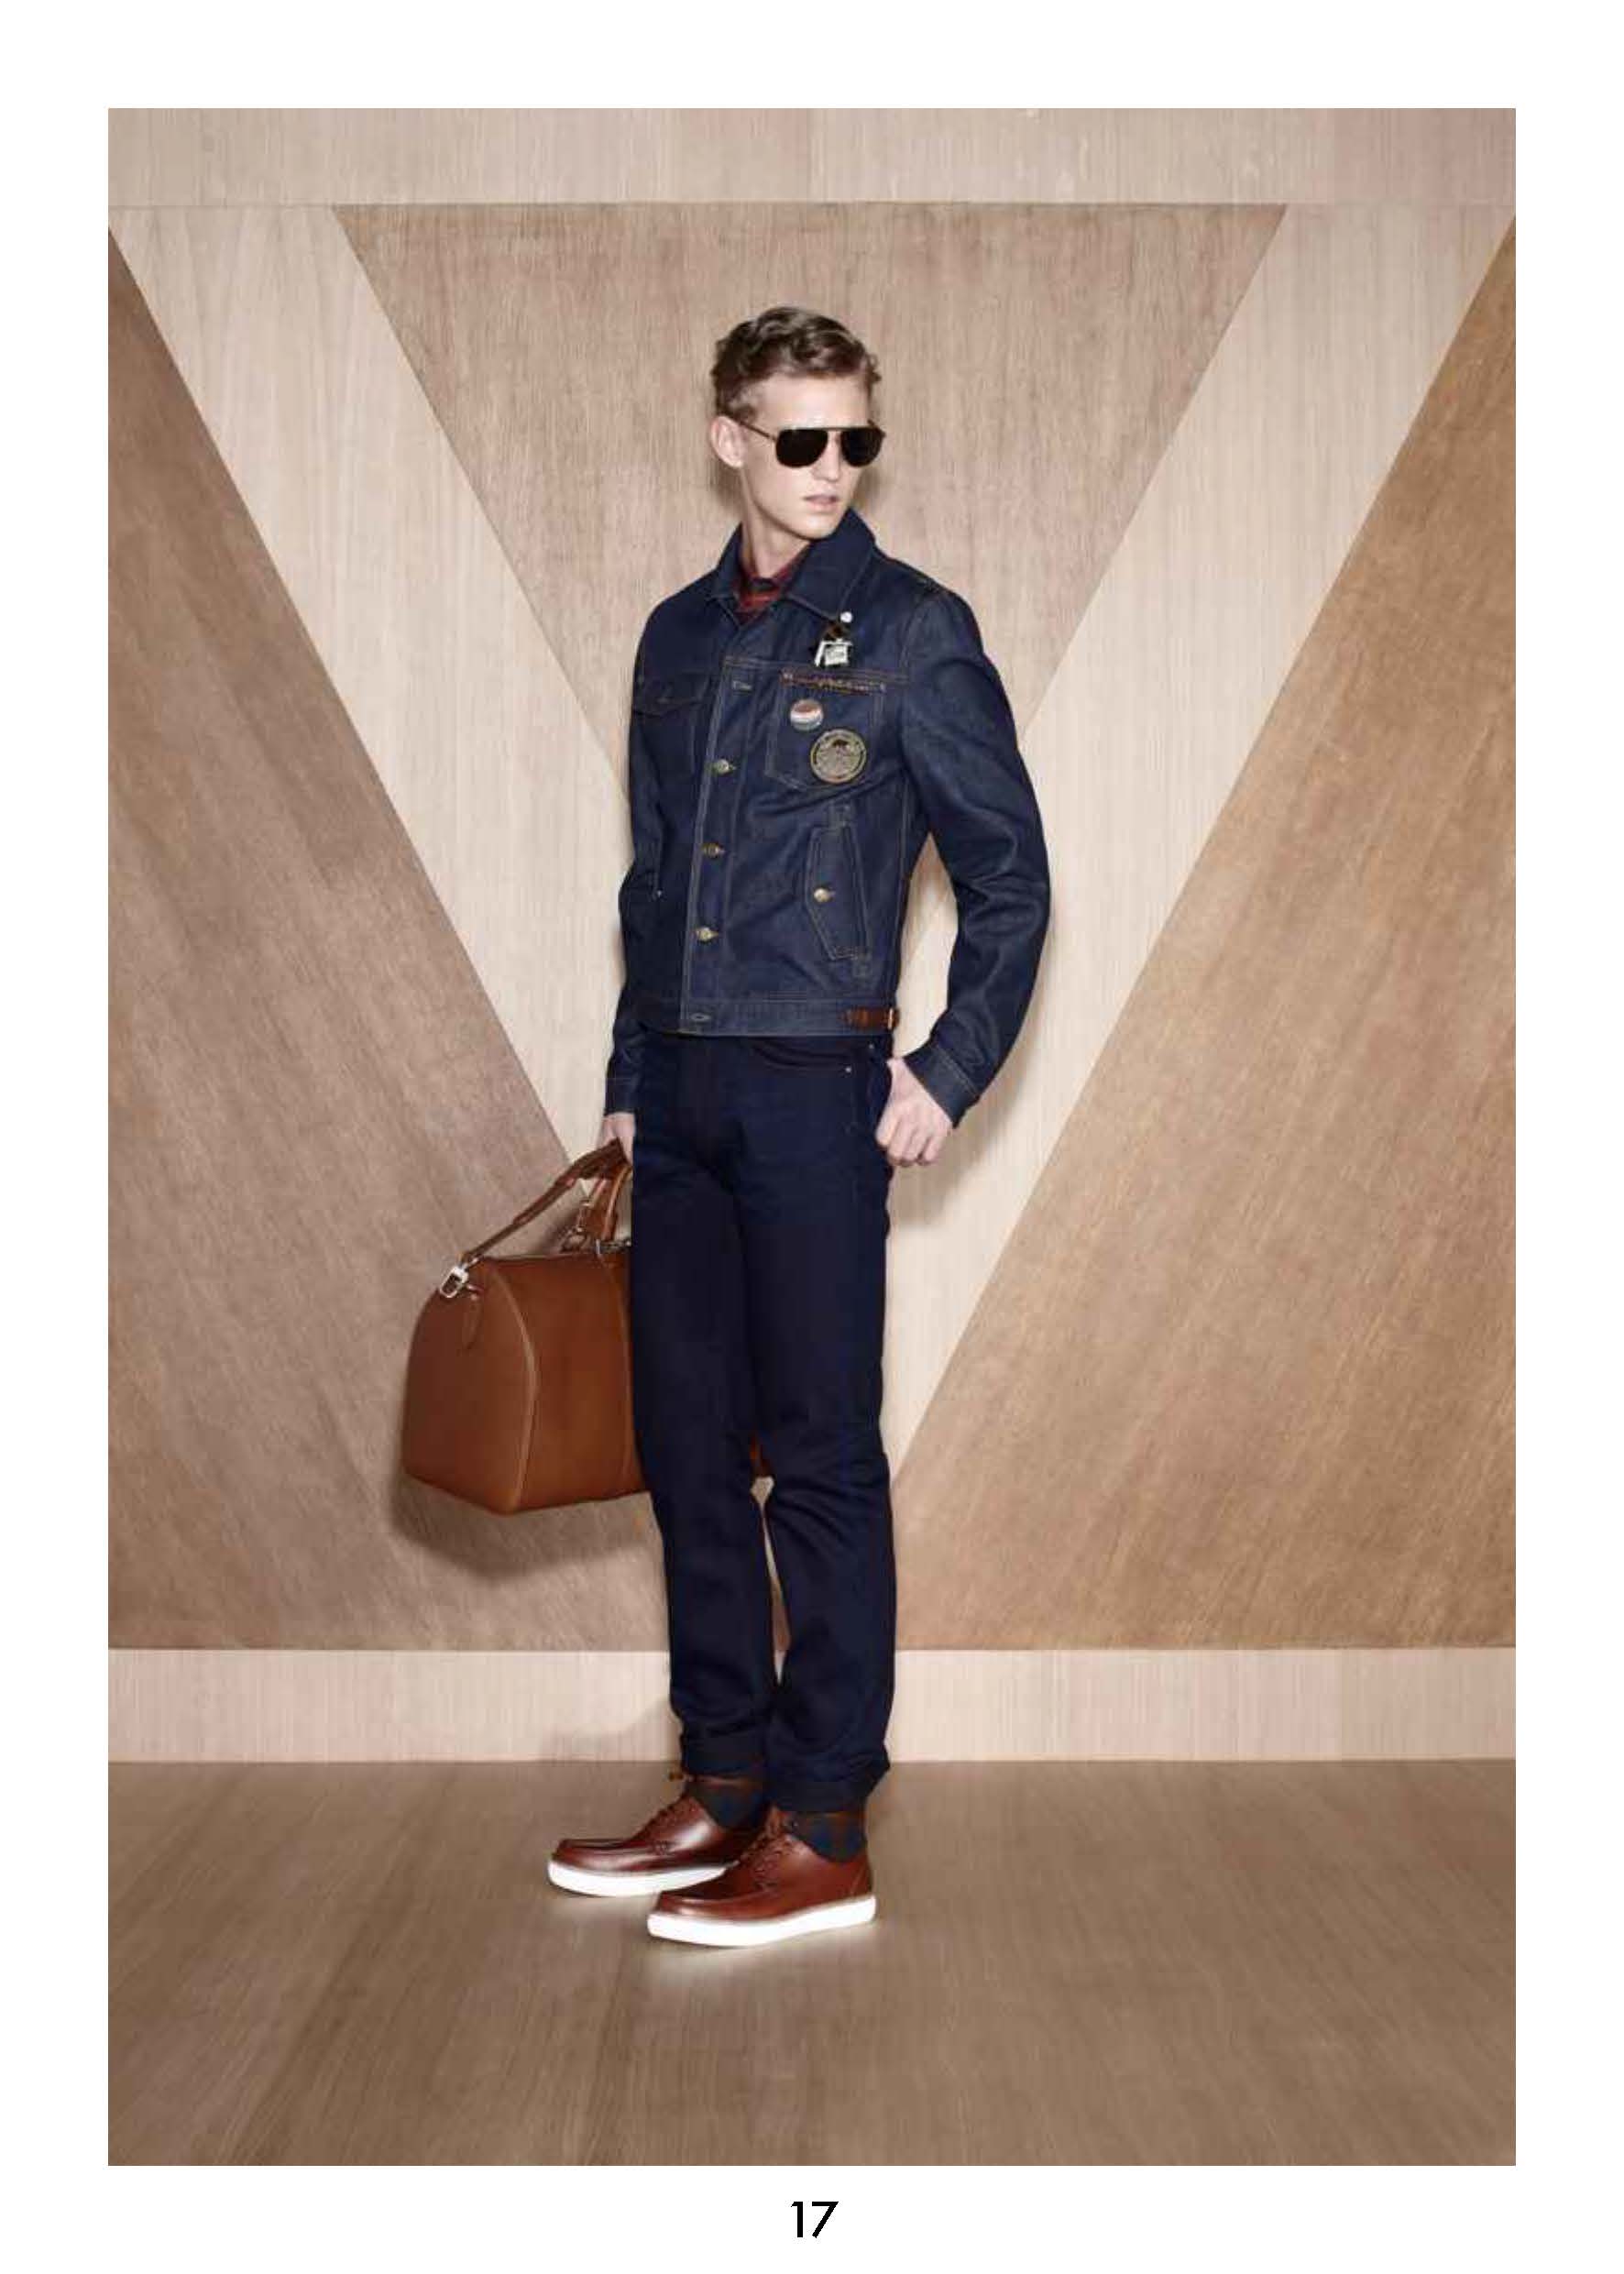 Pre-Order Men's Louis Vuitton – Luxuria & Co.